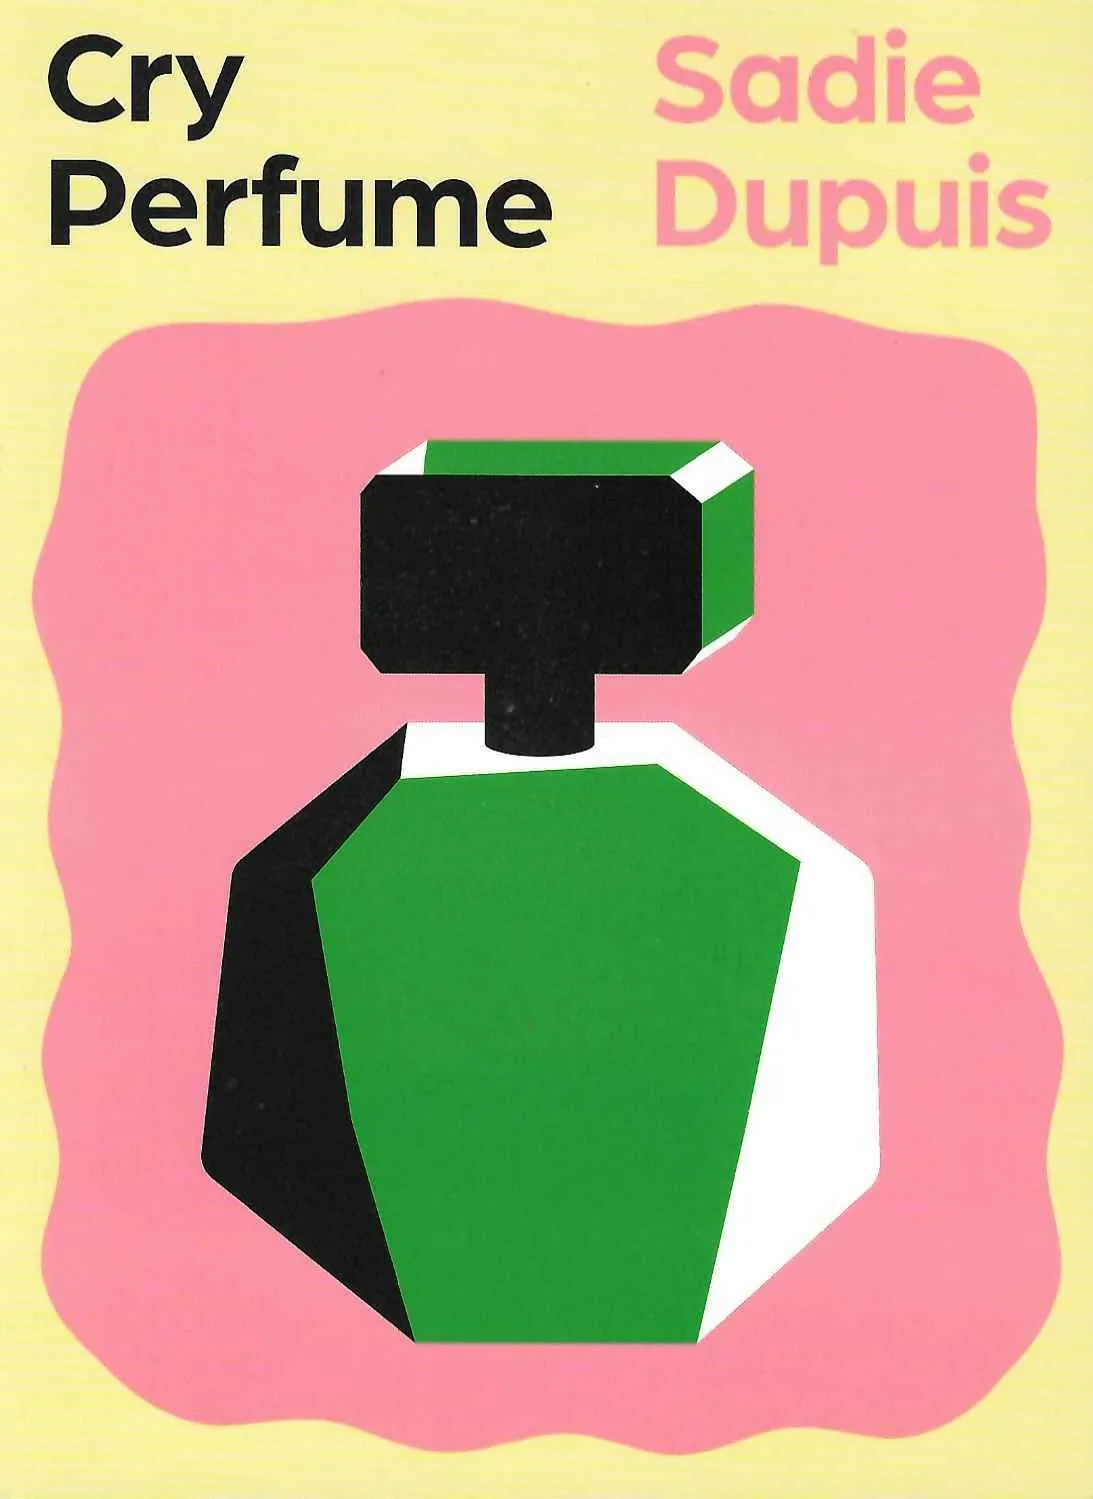 Album artwork for Cry Perfume by Sadie Dupuis